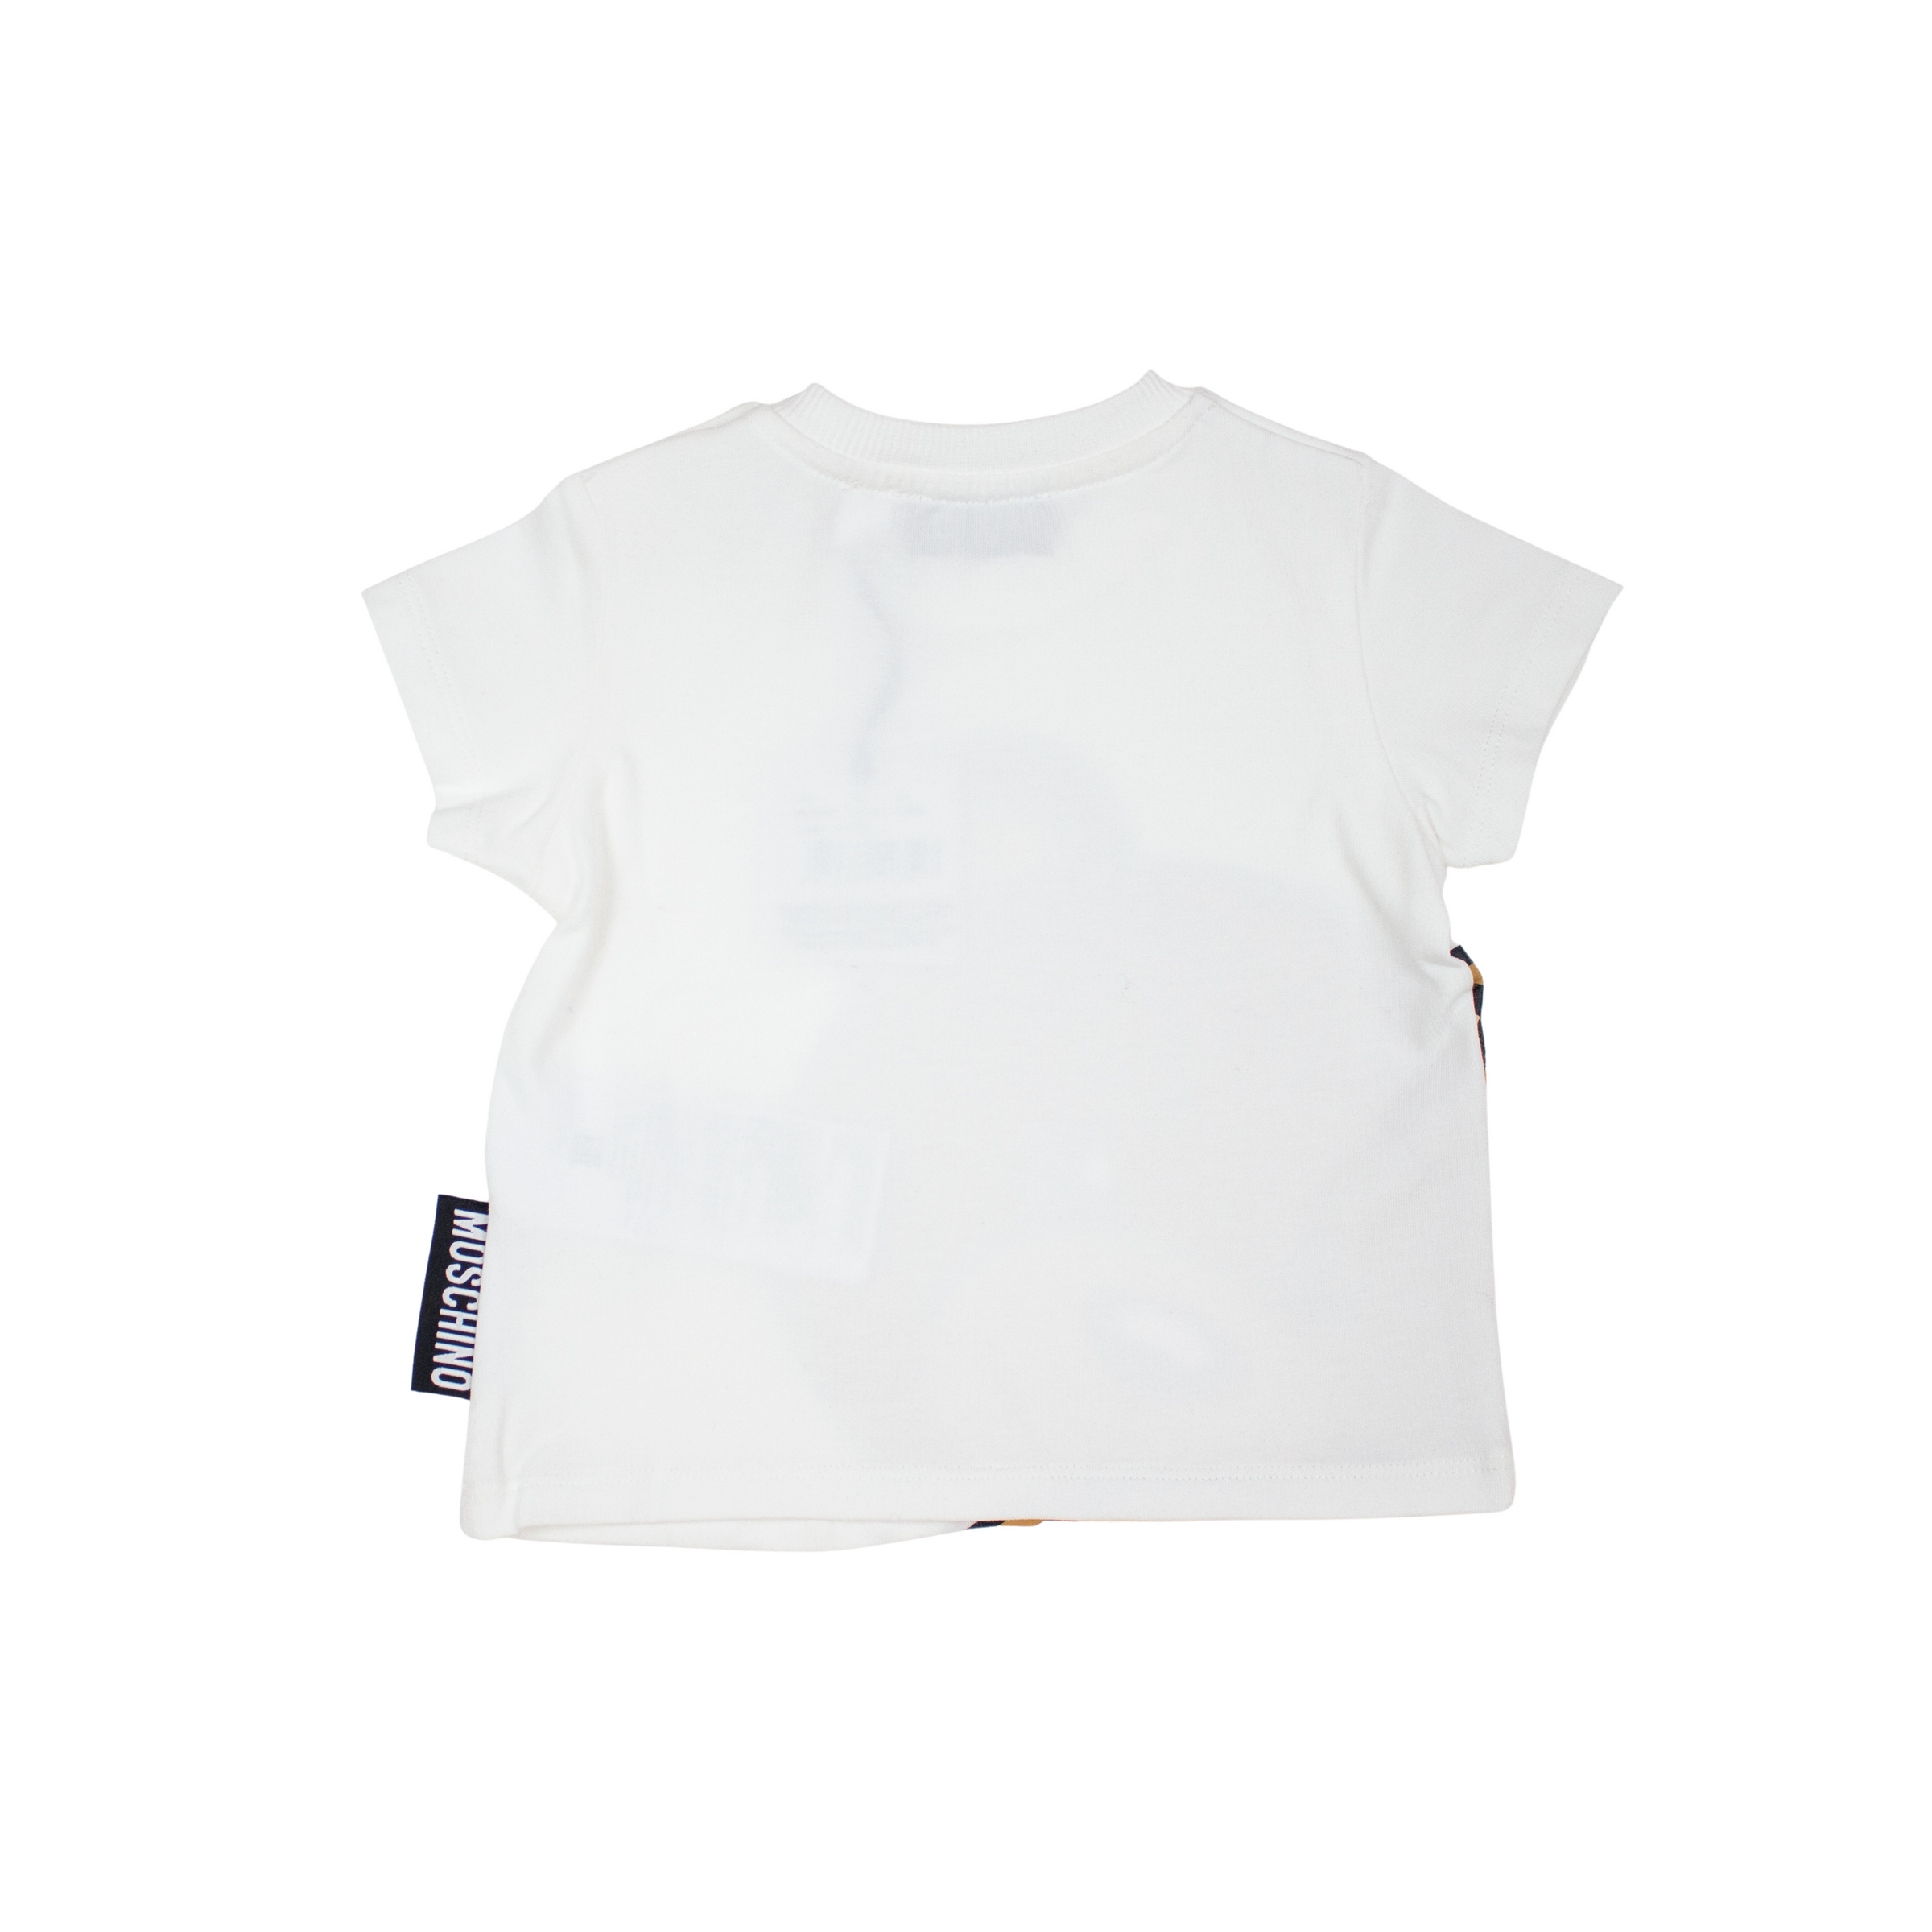 Moschino Kids Baby Large Bear Logo T Shirt White – Crown Forever